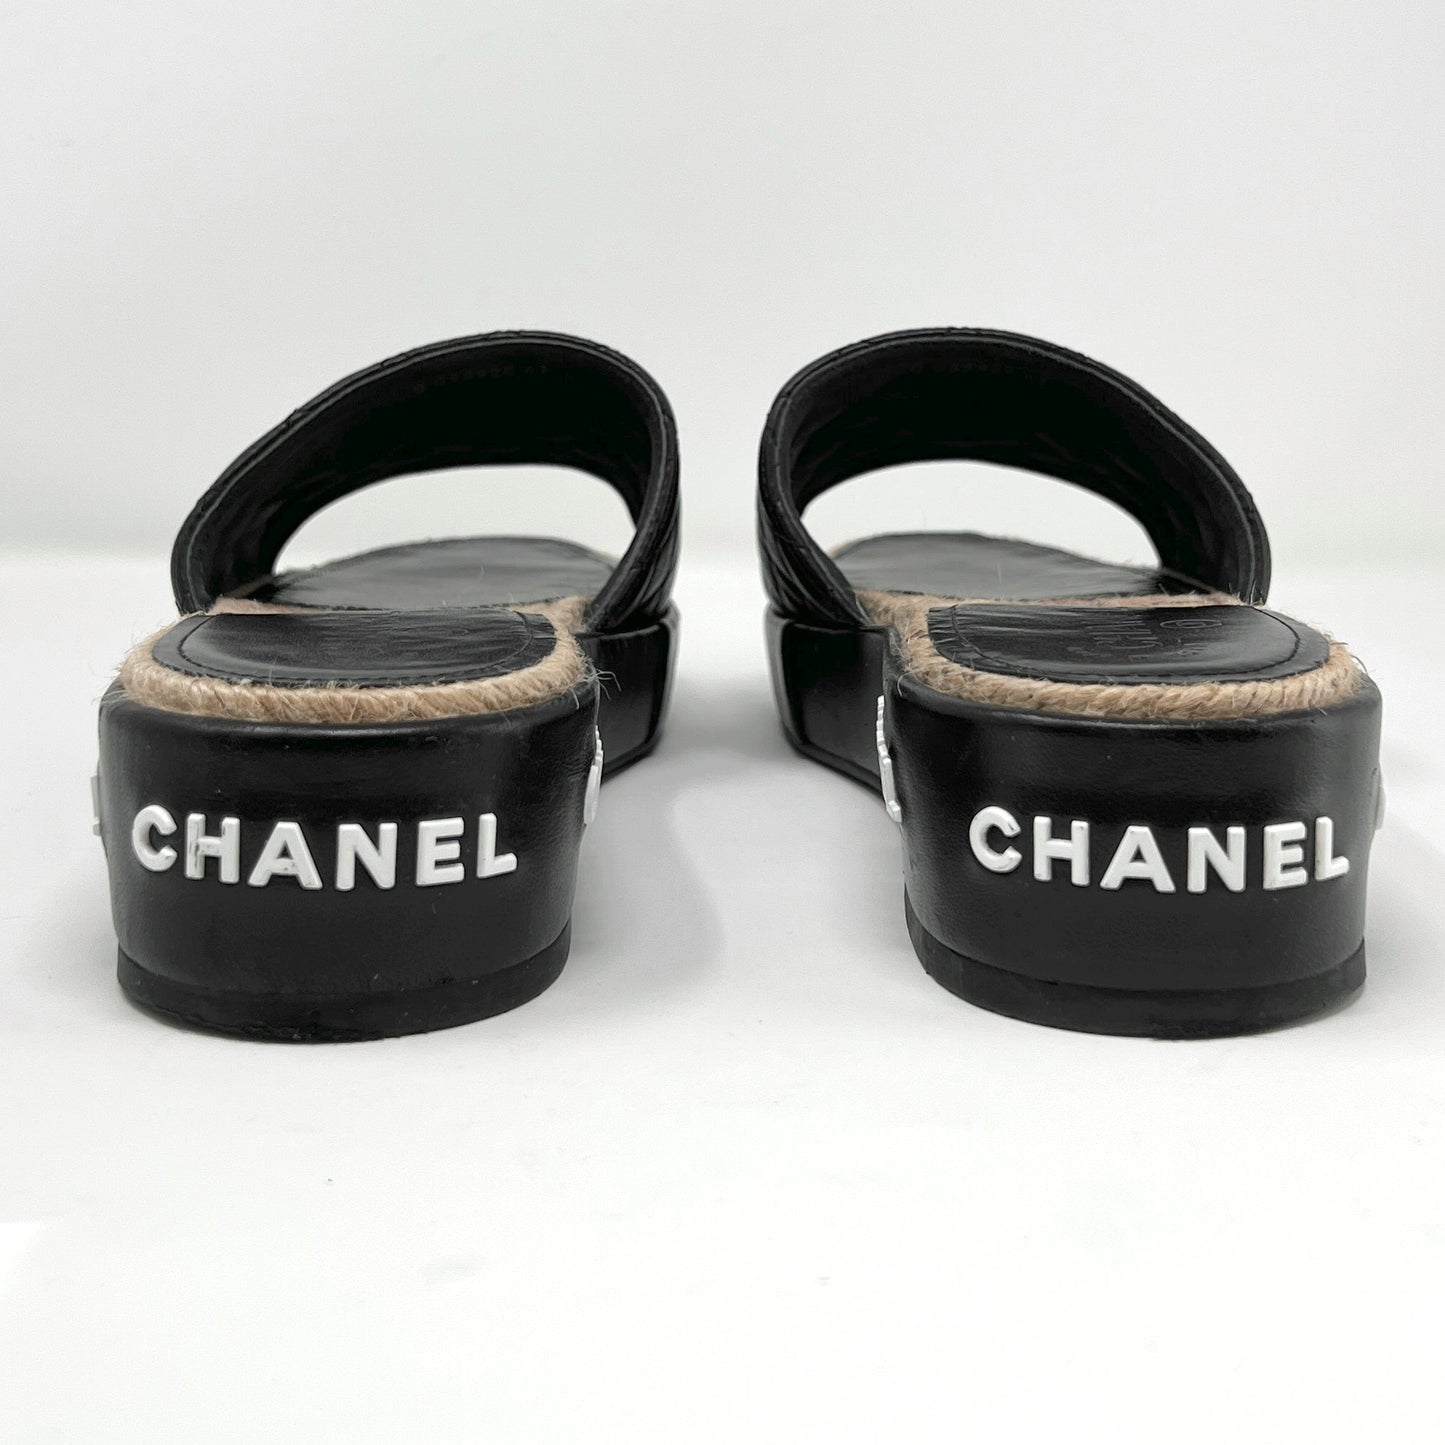 Chanel Black Quilted Leather White Interlocking Logo Espadrilles Sandals Mules Size EU 41